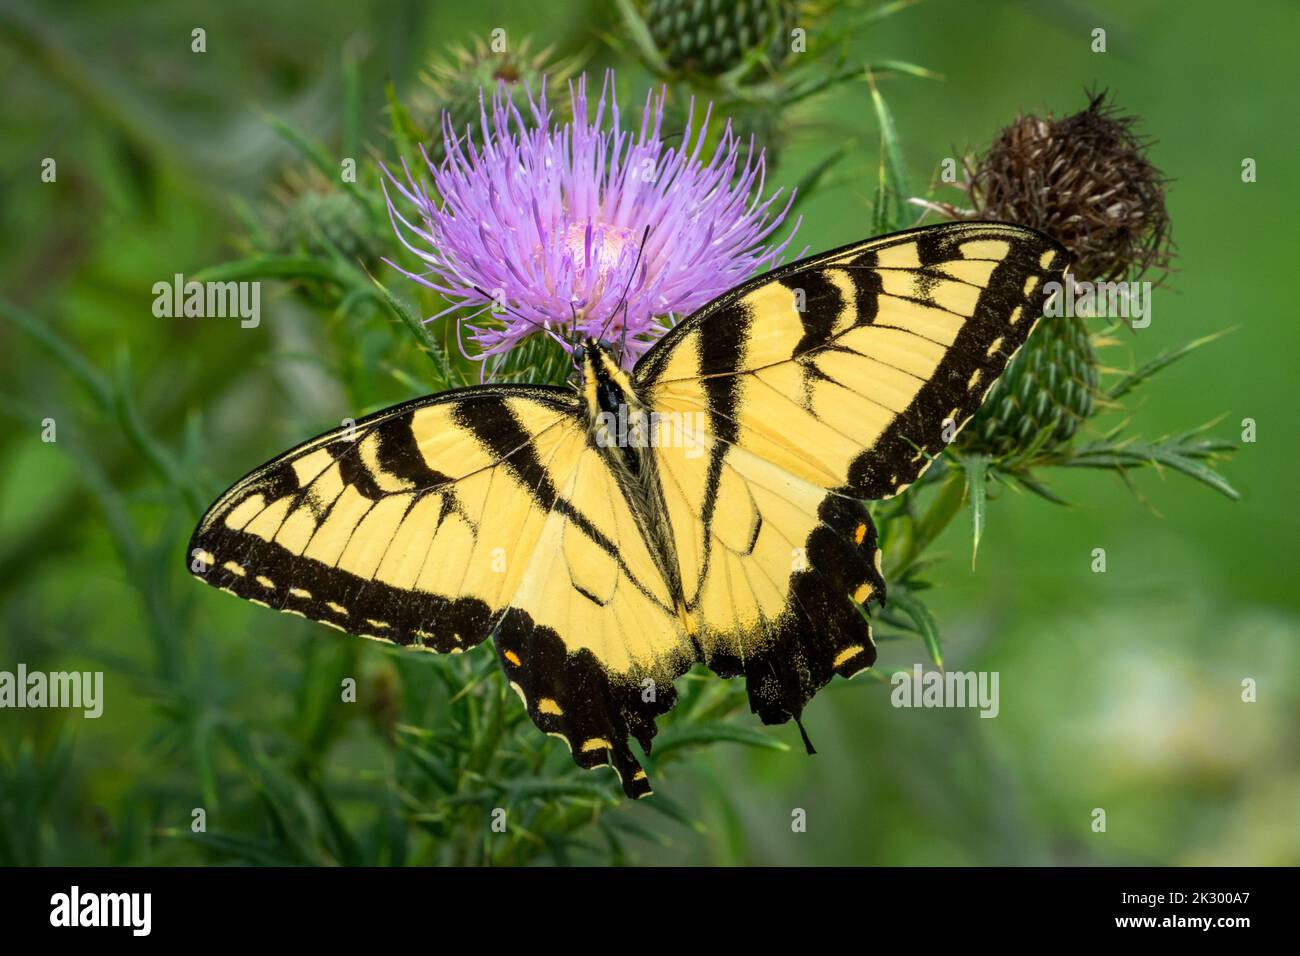 PollinatingEastern Tiger Swallowtail Butterfly on Purple Thistle Stock Photo